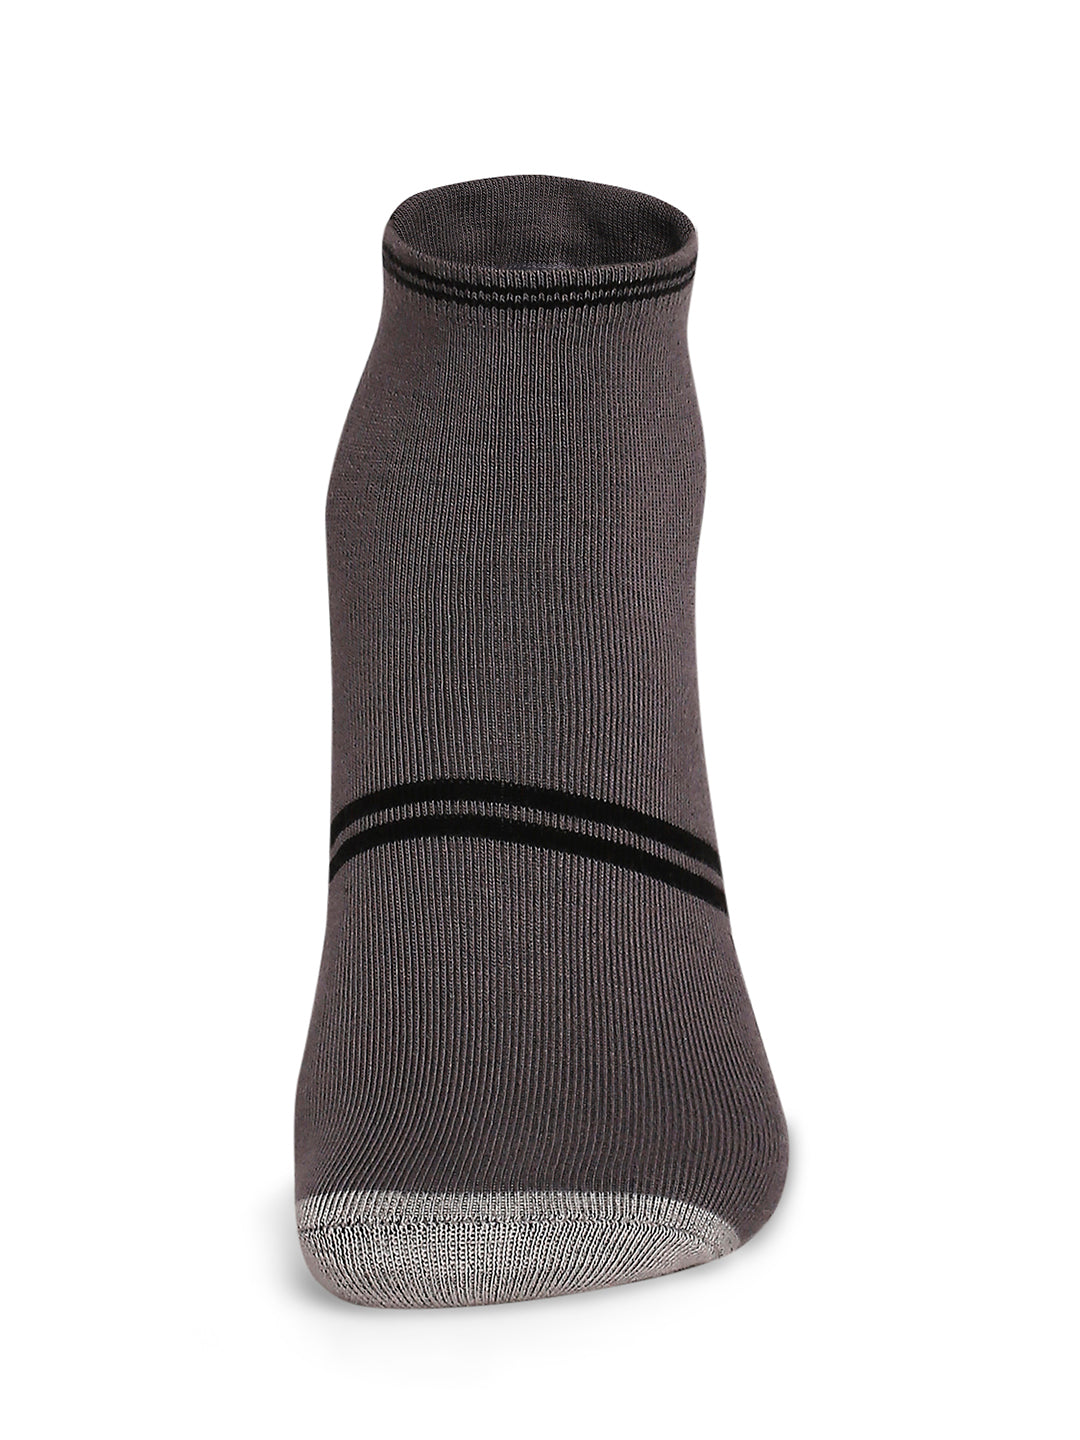 Feelings PO5 Sports Solid 004 Low Cut Assorted Cotton Socks